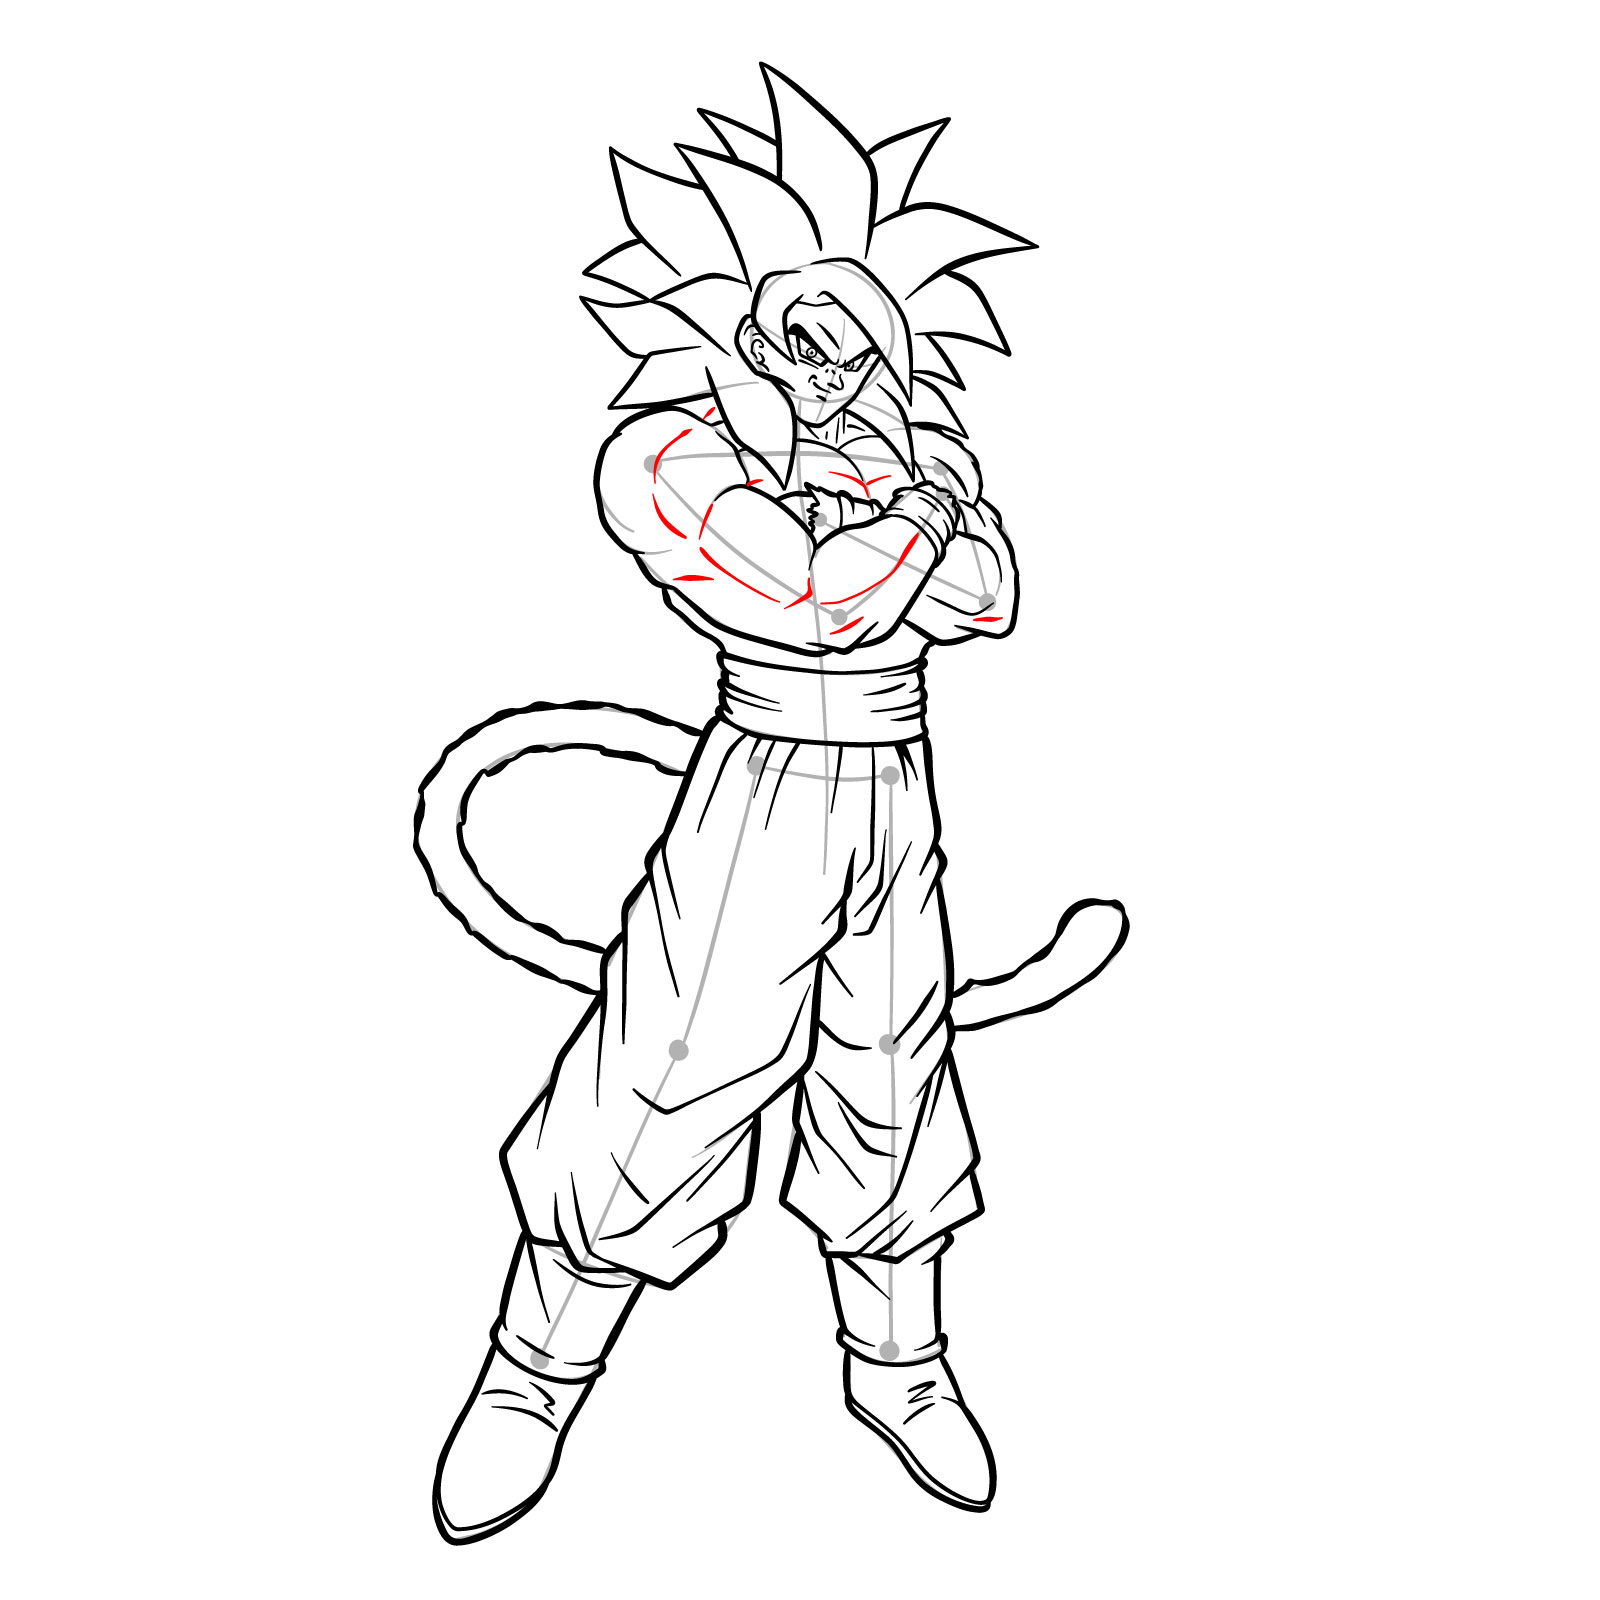 How to tát draw Goku Super Saiyan 4 - step 33